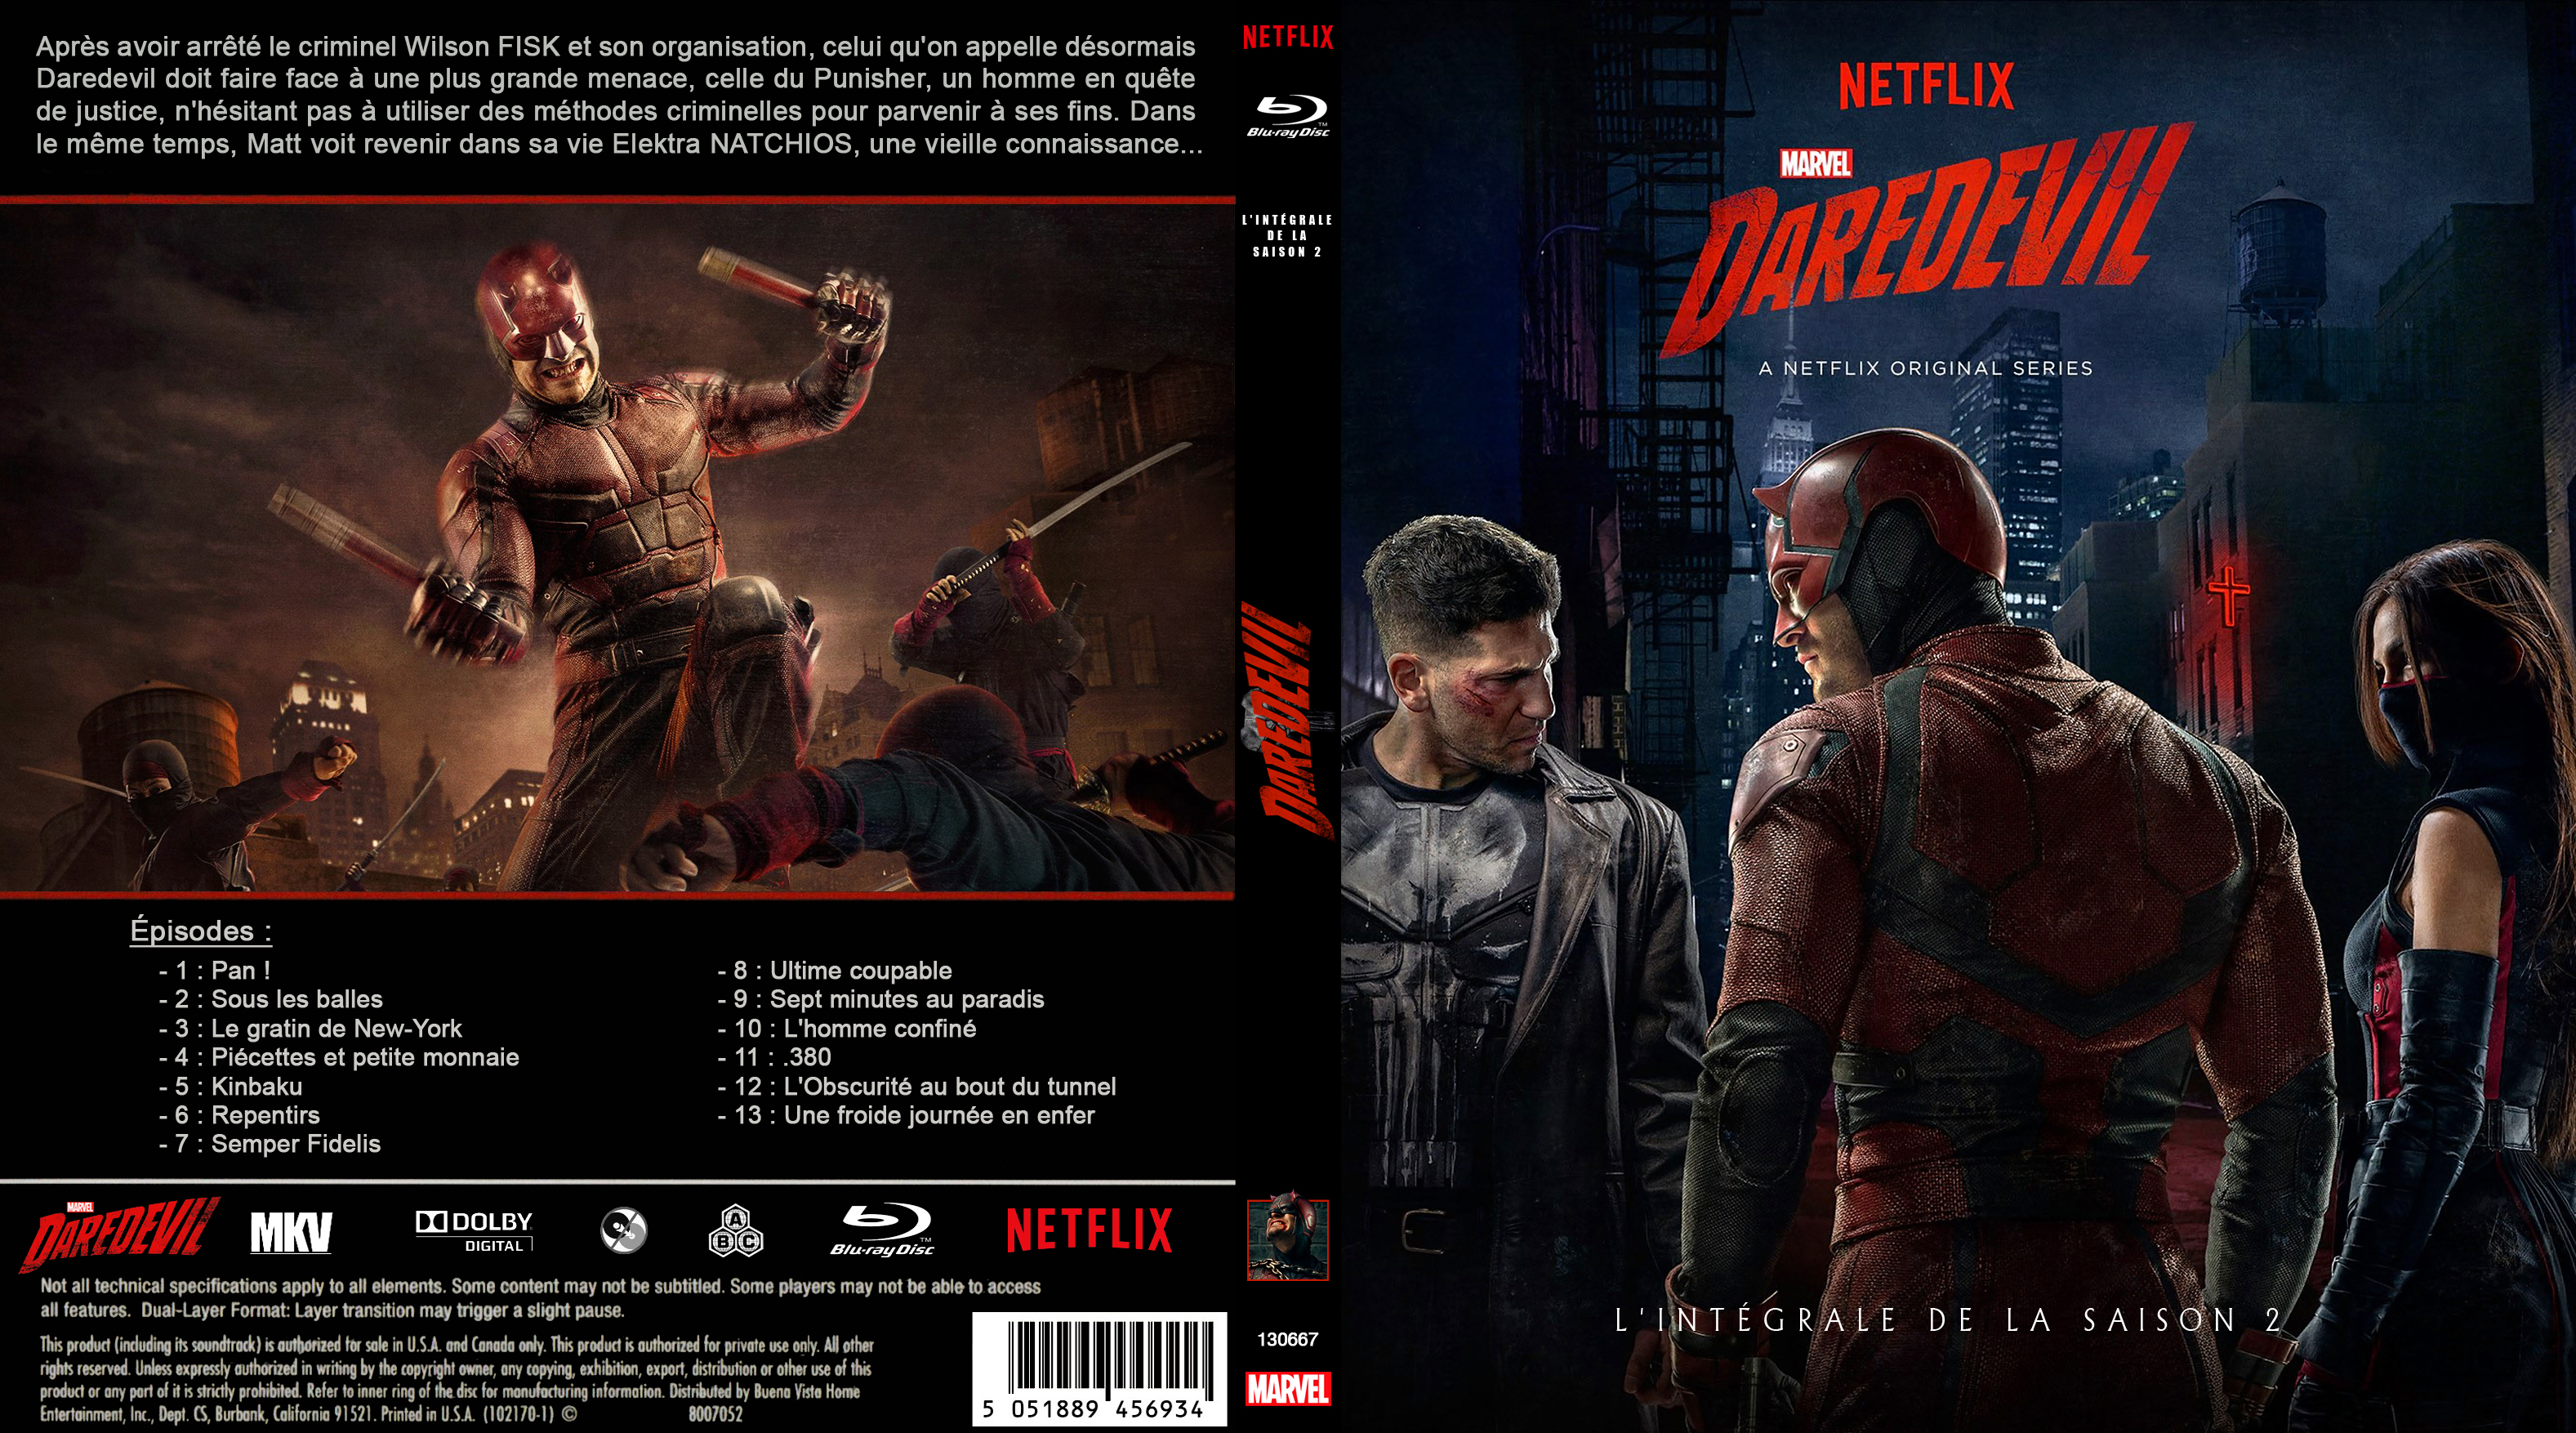 Jaquette DVD Daredevil Saison 2 custom (BLU-RAY)